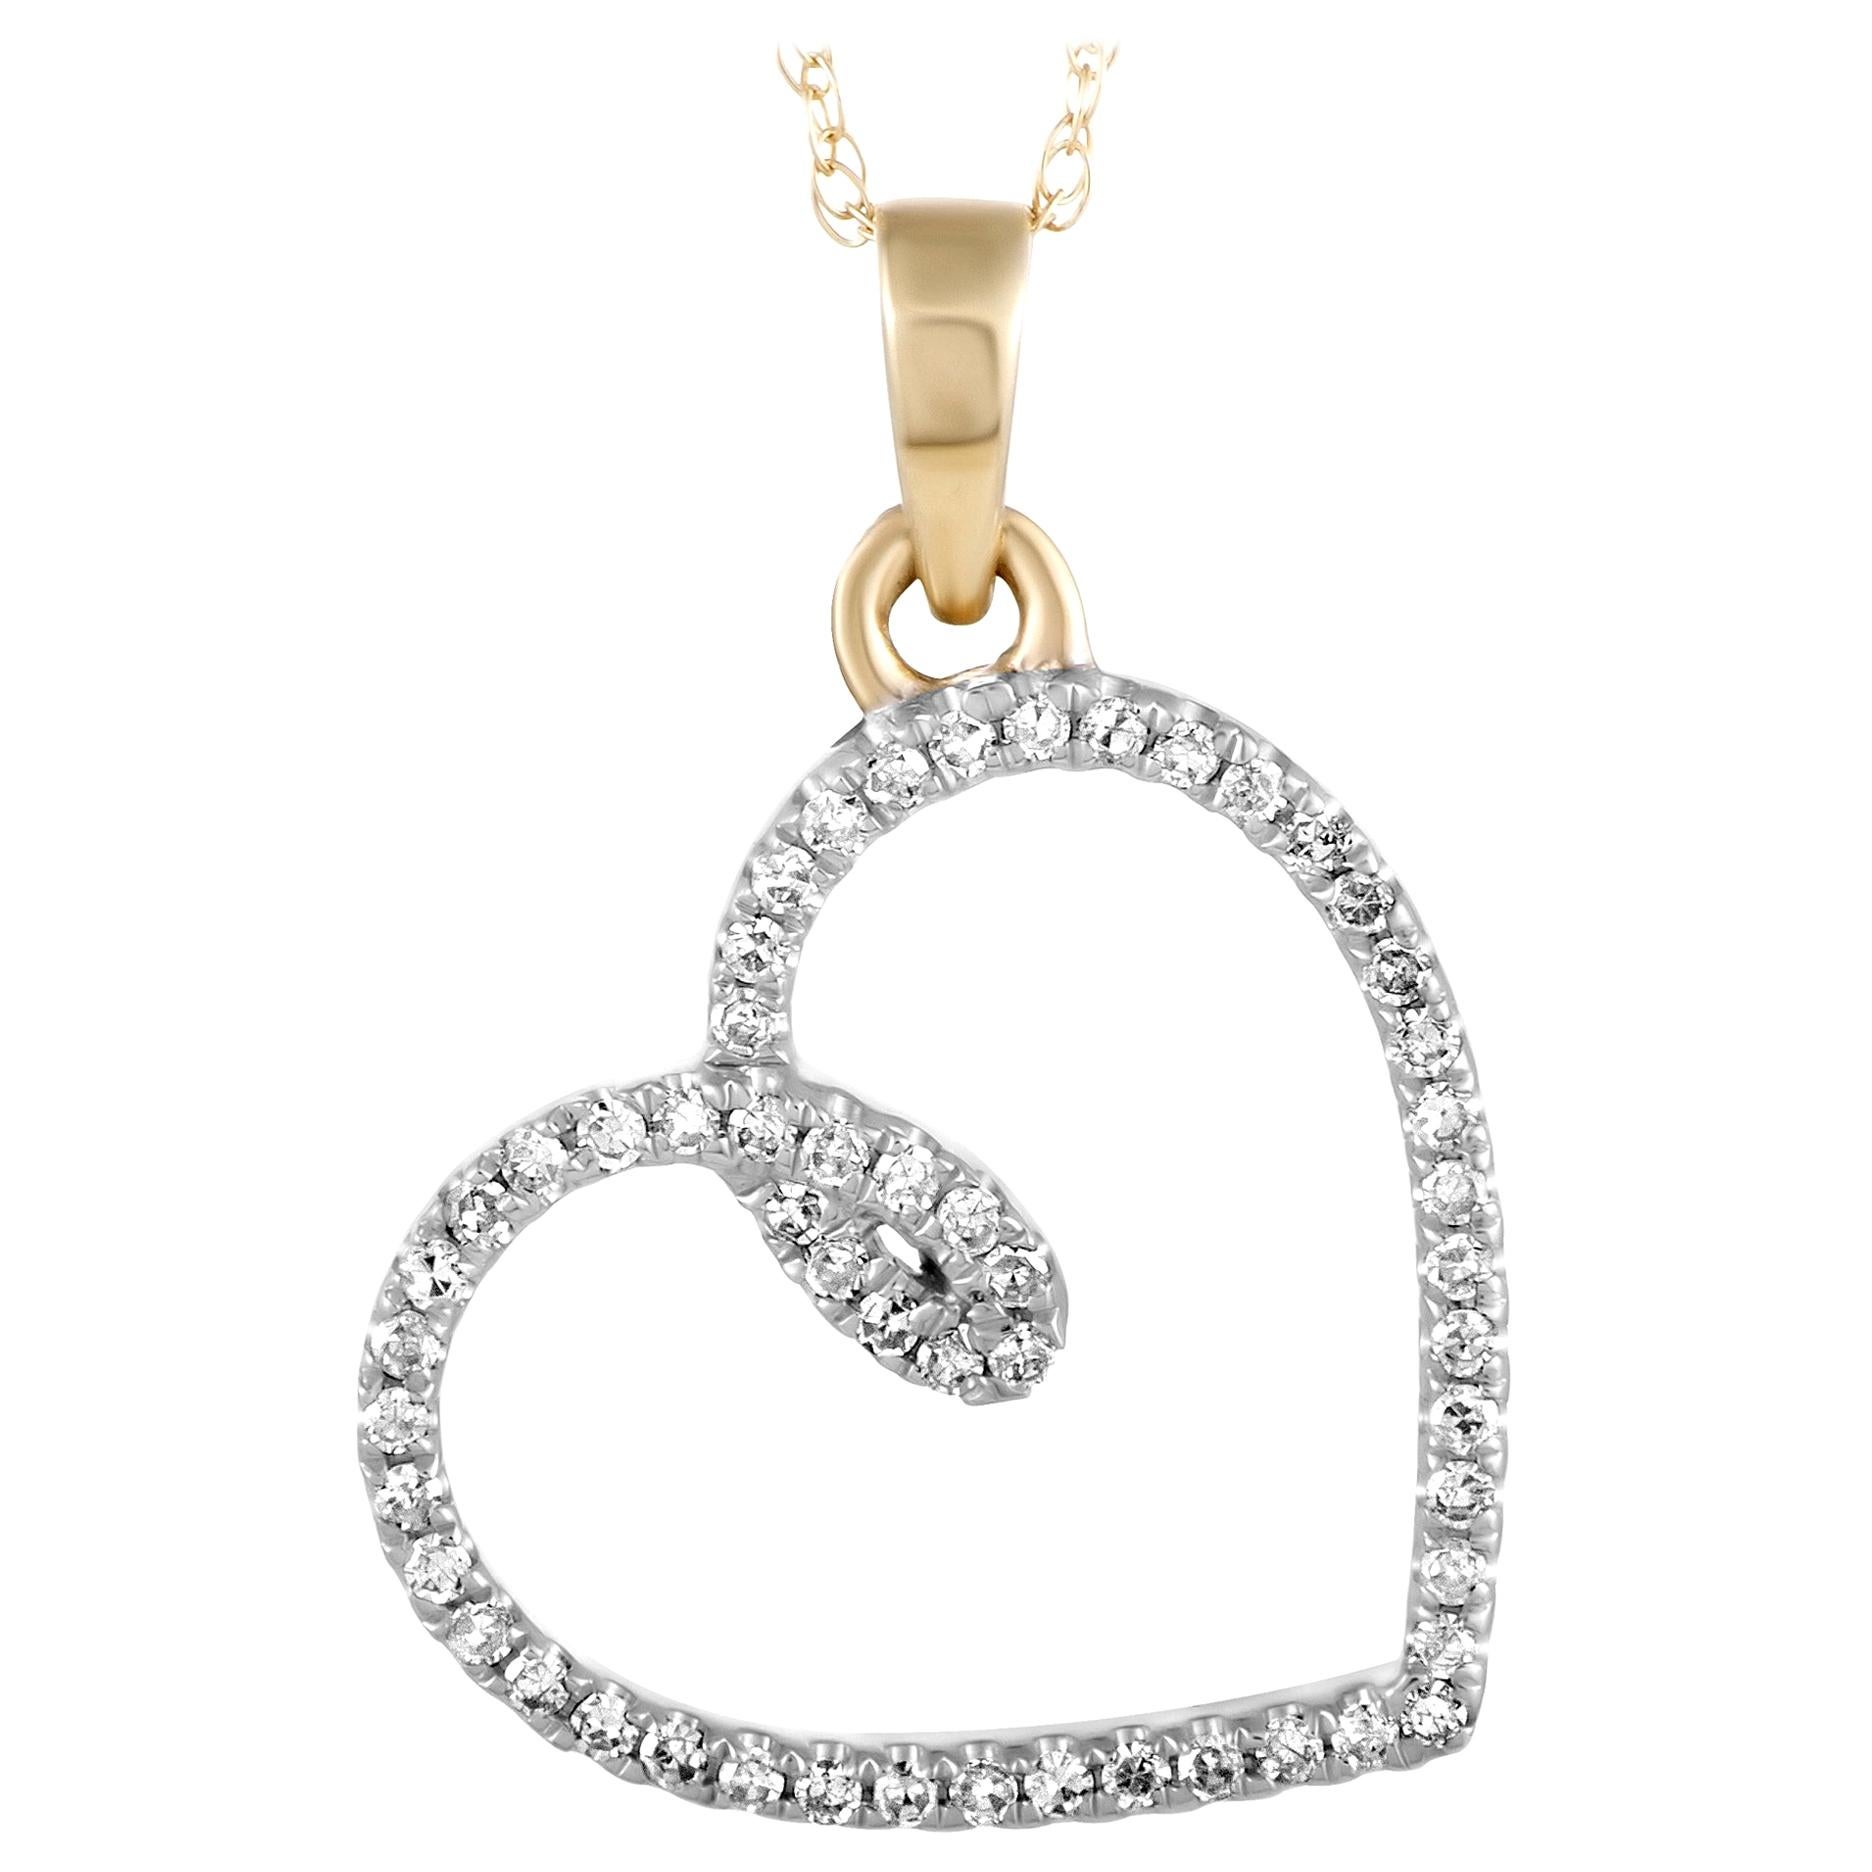 14 Karat Yellow Gold Diamond Heart Pendant Necklace